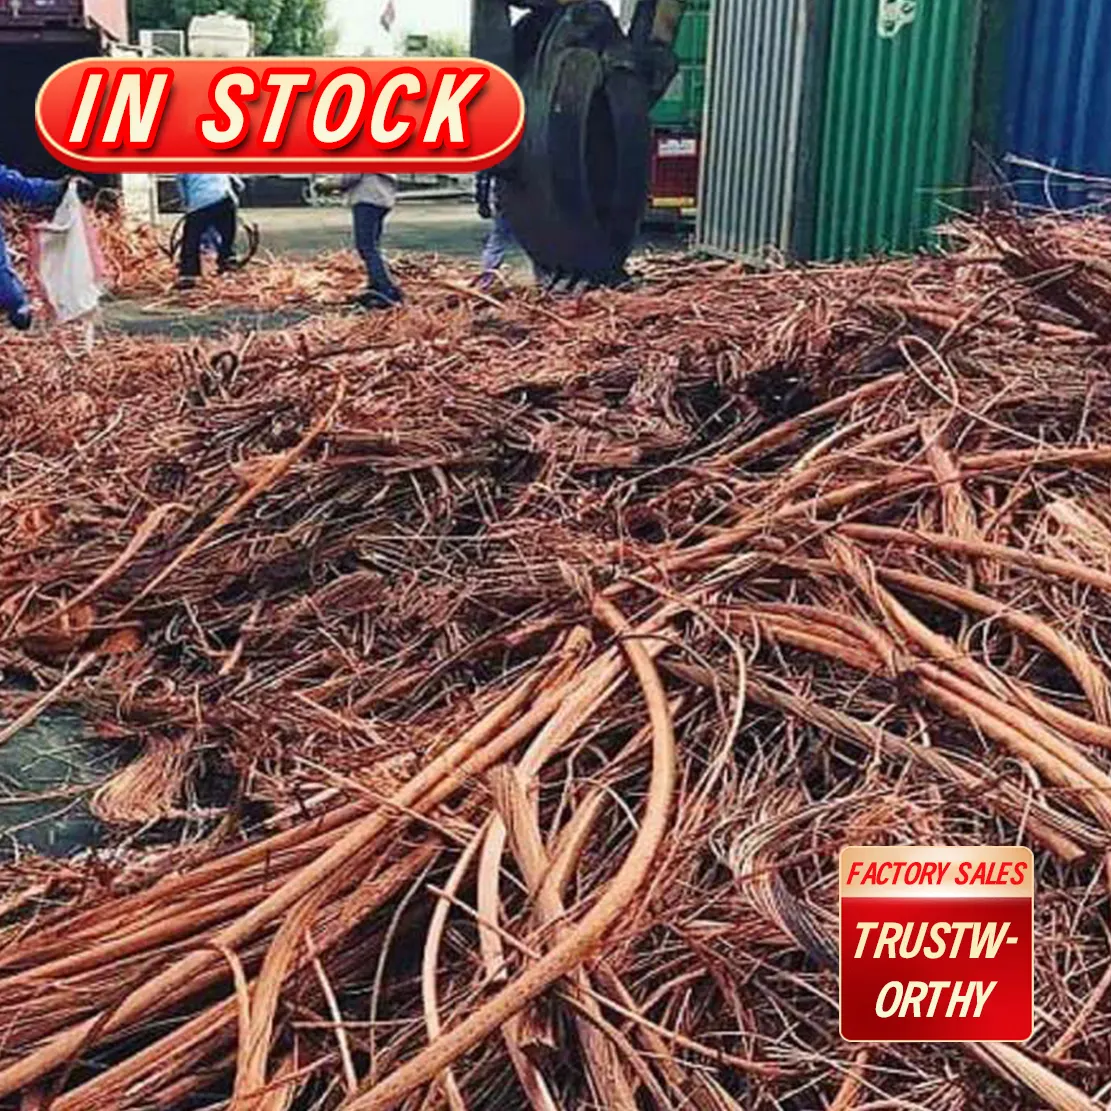 Preço baixo Sucata de fio de cobre por atacado cobre especial venda quente fábrica diretamente sucata de fio de cobre de pureza